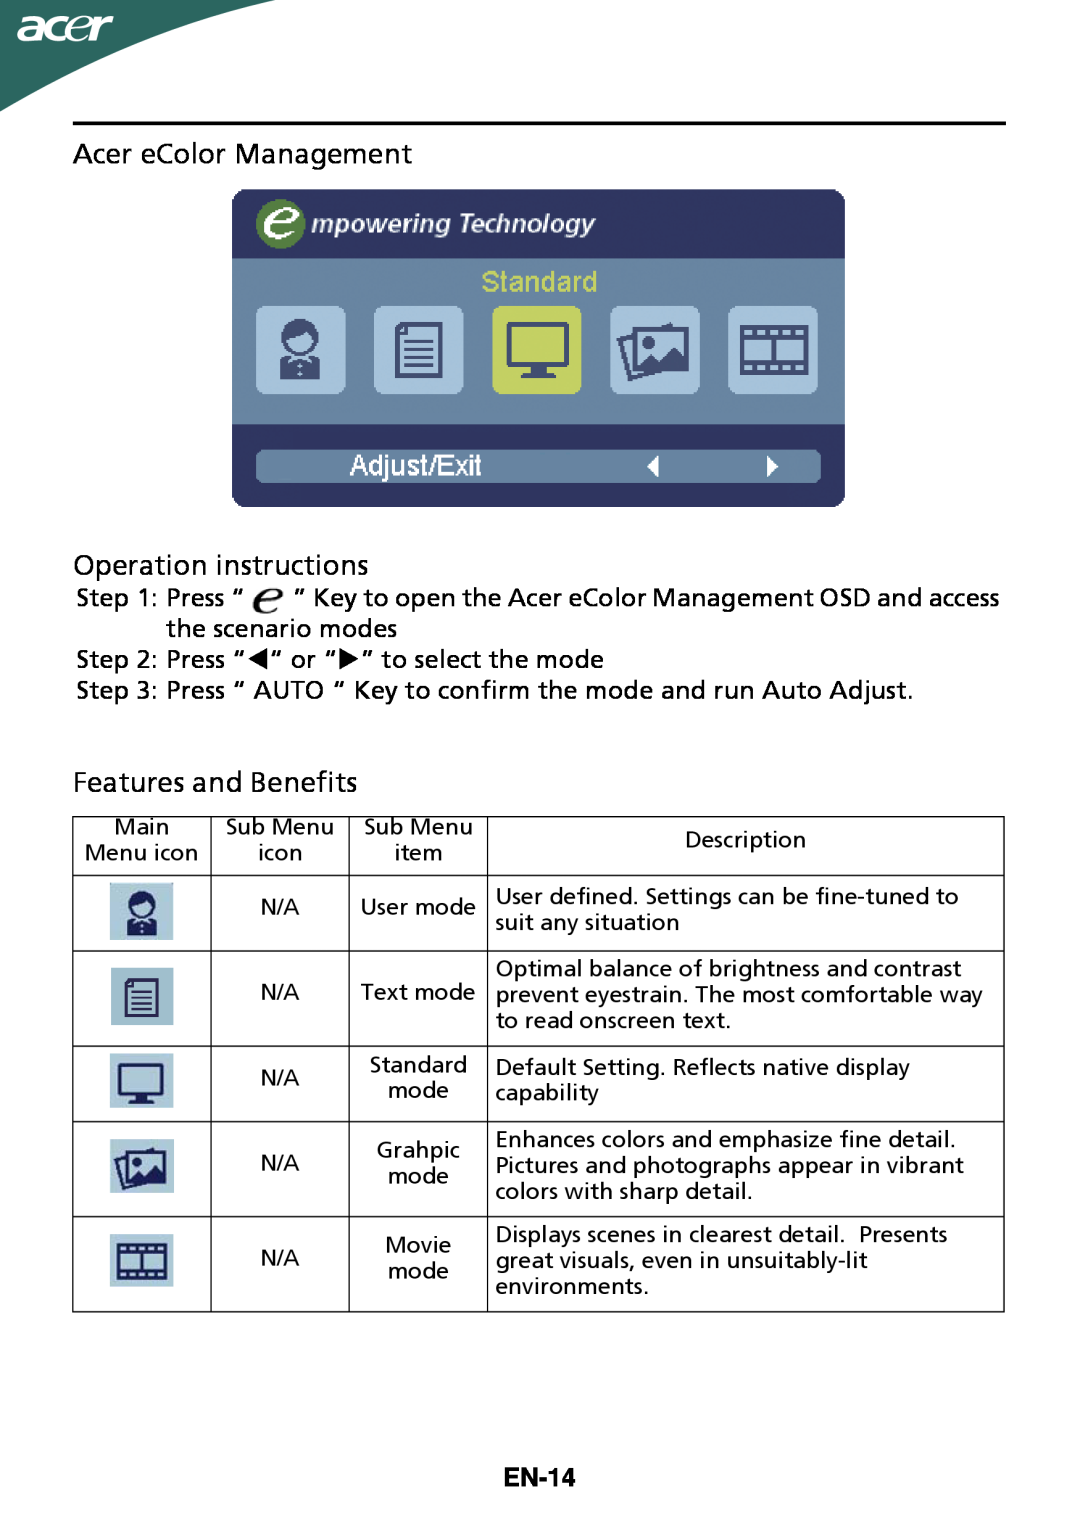 Acer G205HV manual Acer eColor Management Operation instructions, Features and Benefits, EN-14 